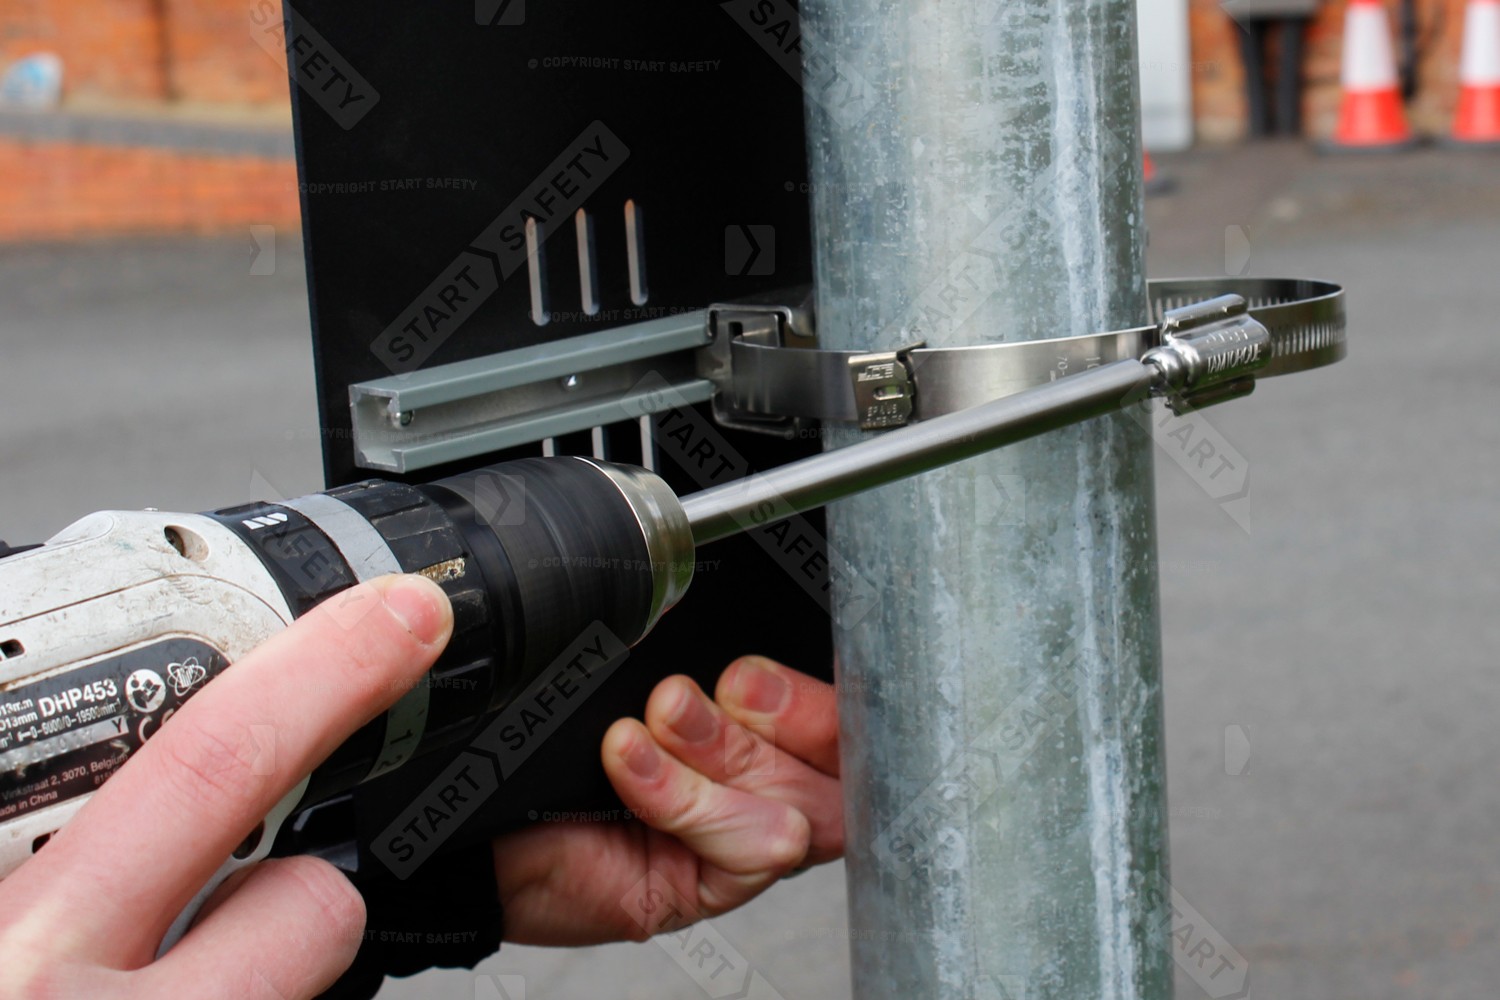 JCS Tamtorque Anti Tamper Security Fixing Clip Used To Fix A Speec Camera